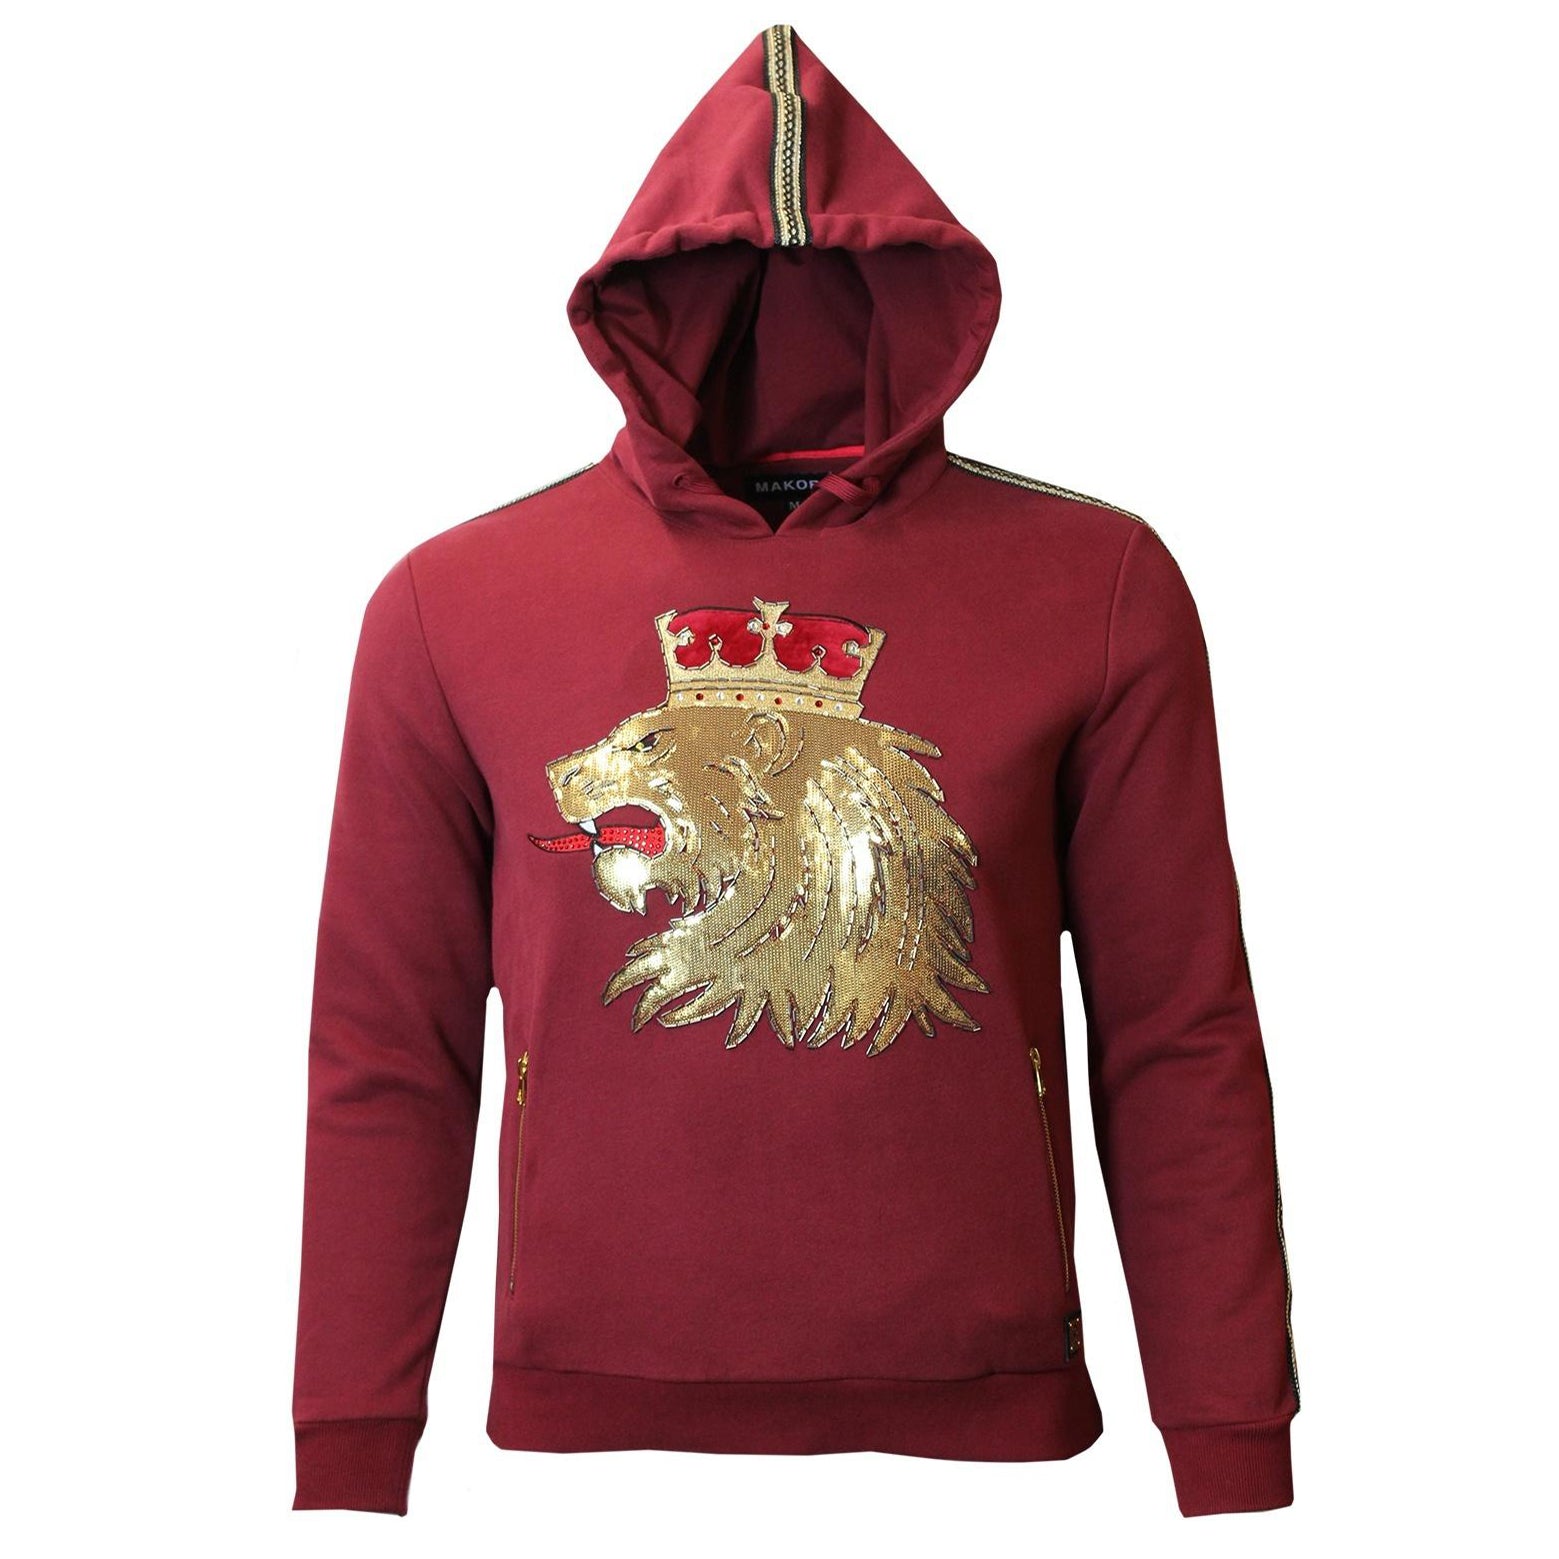 M5700 Makobi Lion Crown Fleece Sweatshirt - Burgundy